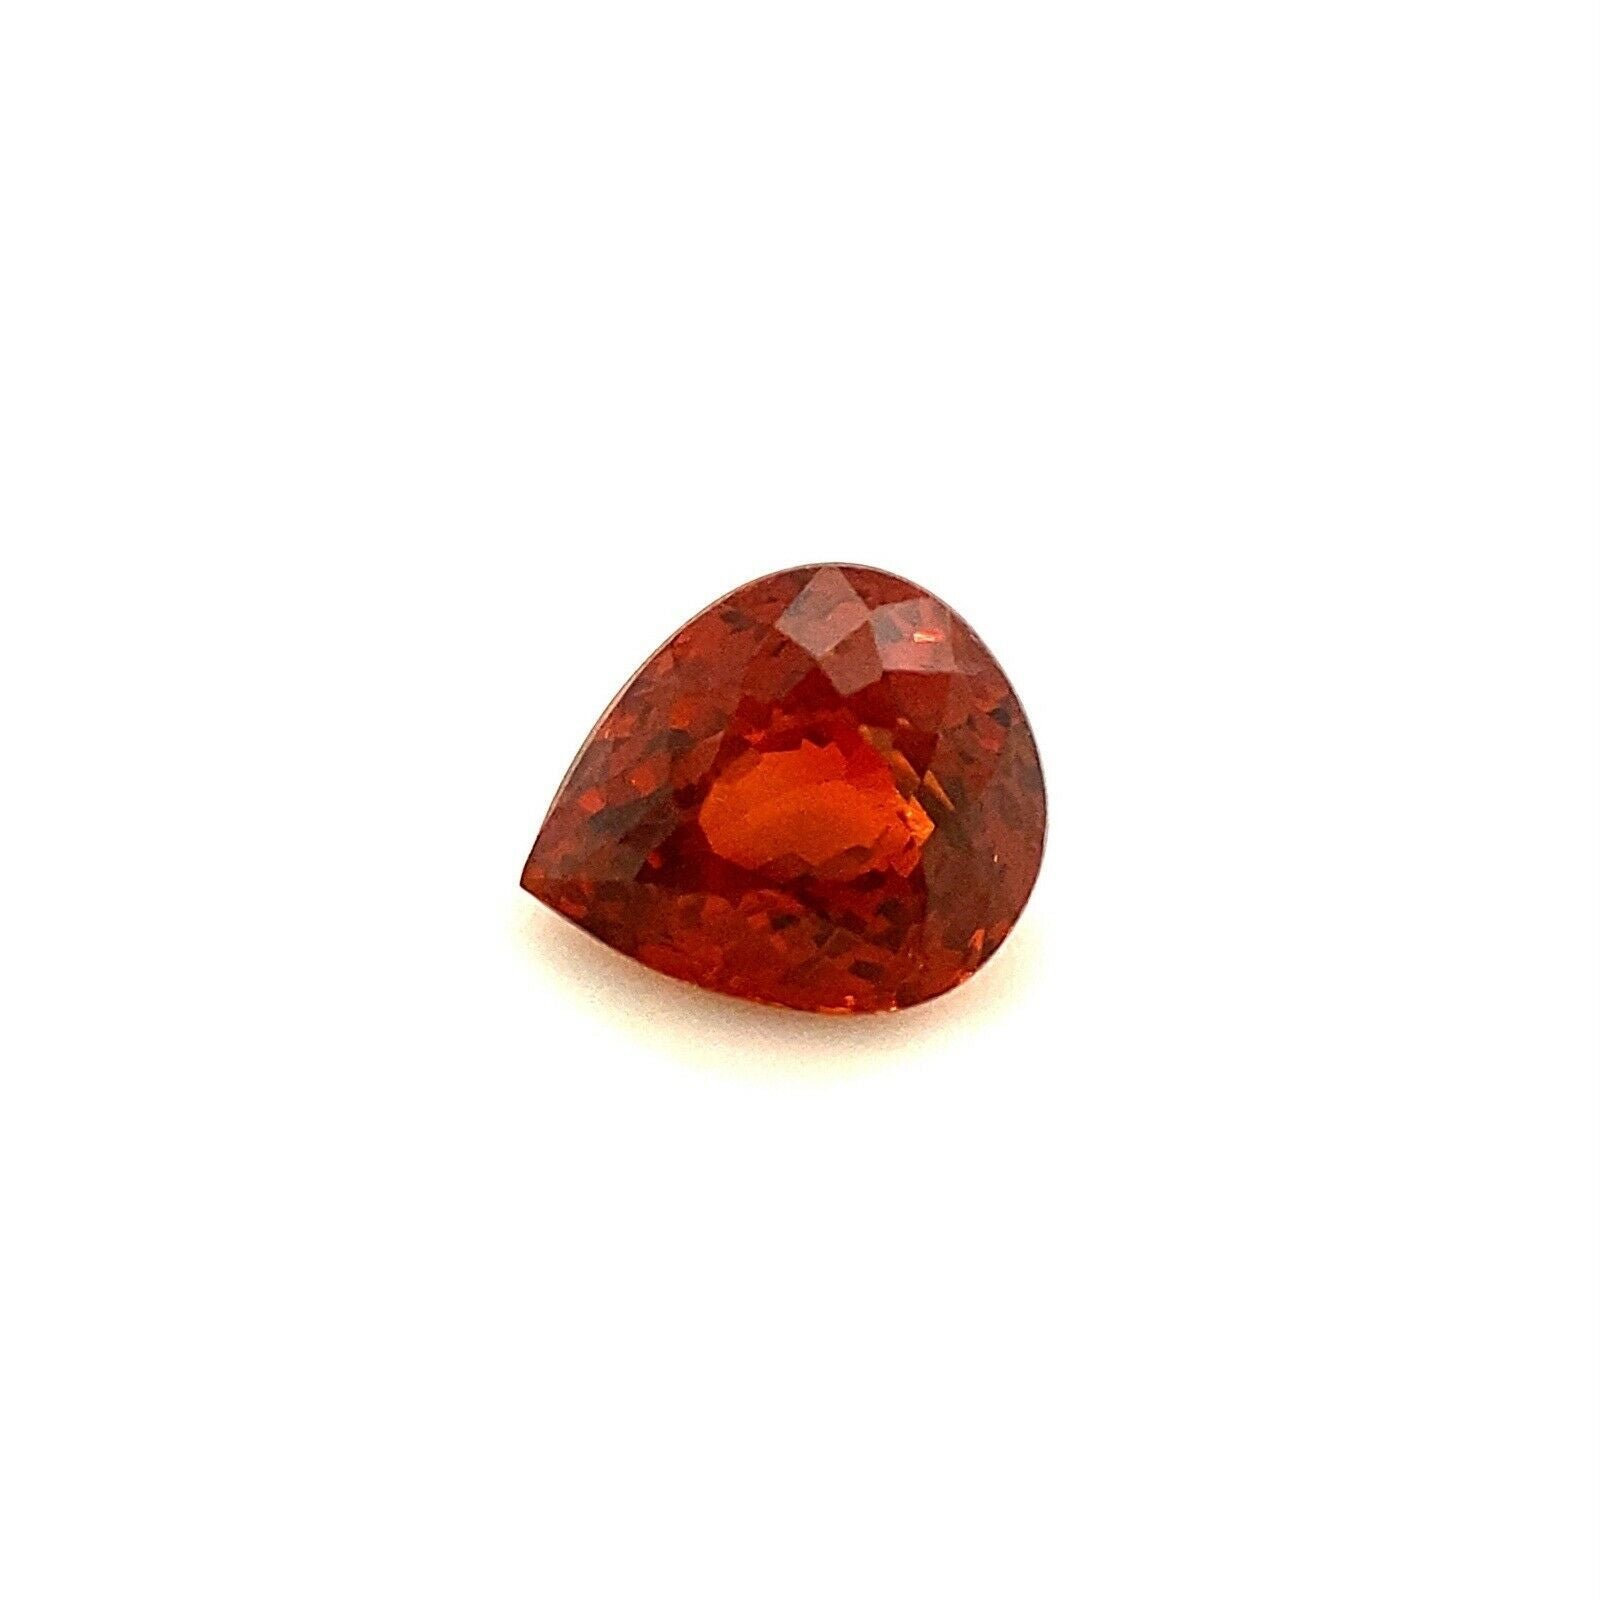 Fine 1.37ct Vivid Orange Red Spessartine Garnet Pear Cut Loose Gem